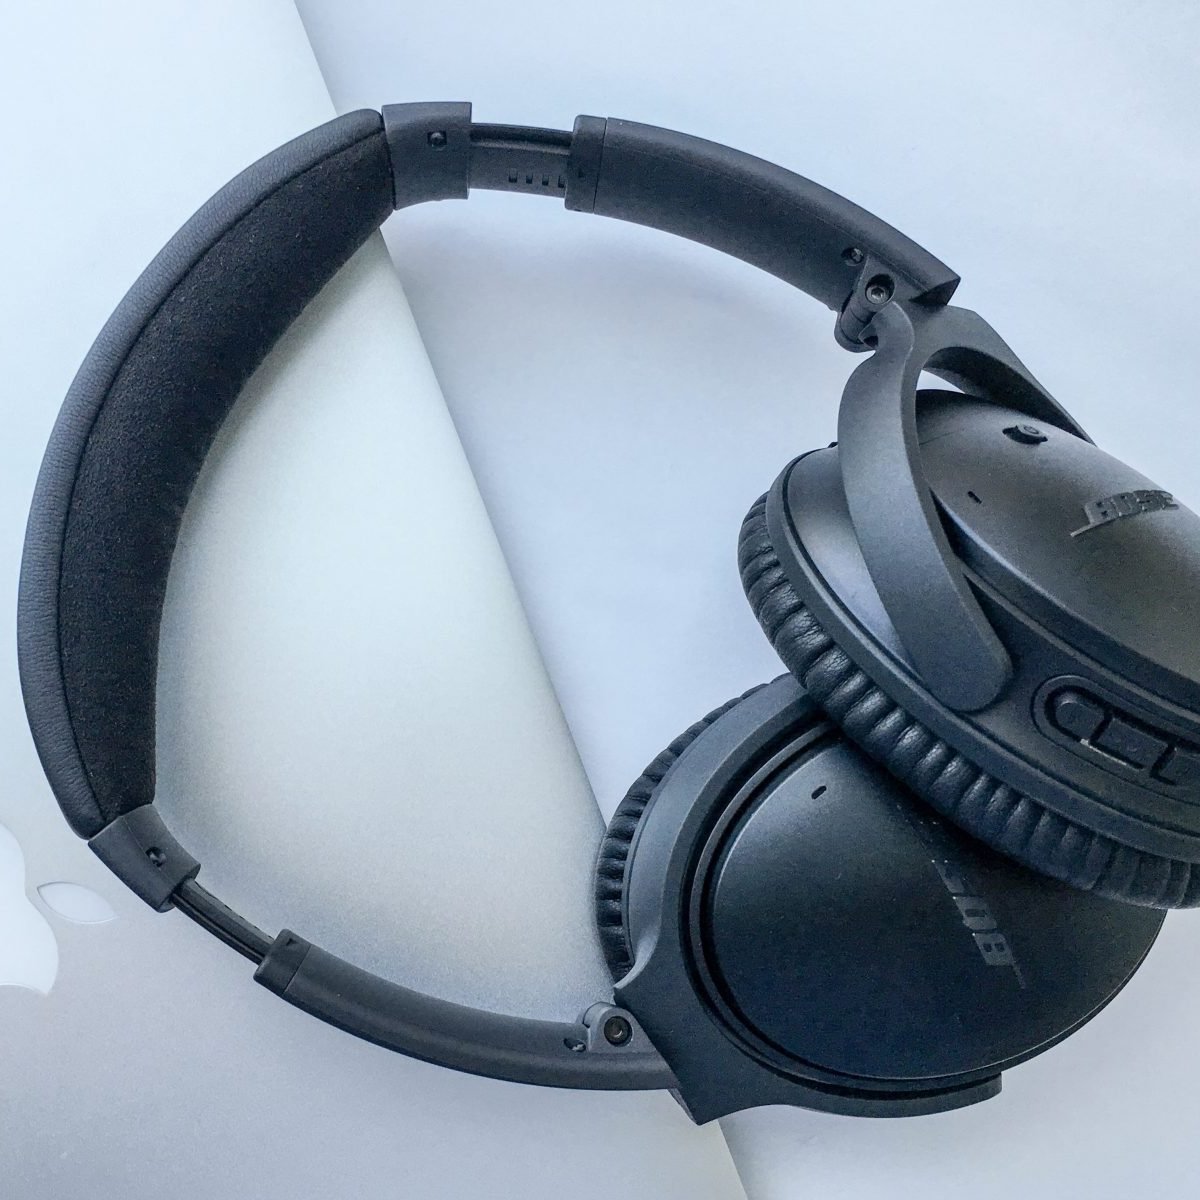 rense slutpunkt vant Review: BOSE QuietComfort 35 - The "GETTING THINGS DONE" Headphone -  Headphonesty